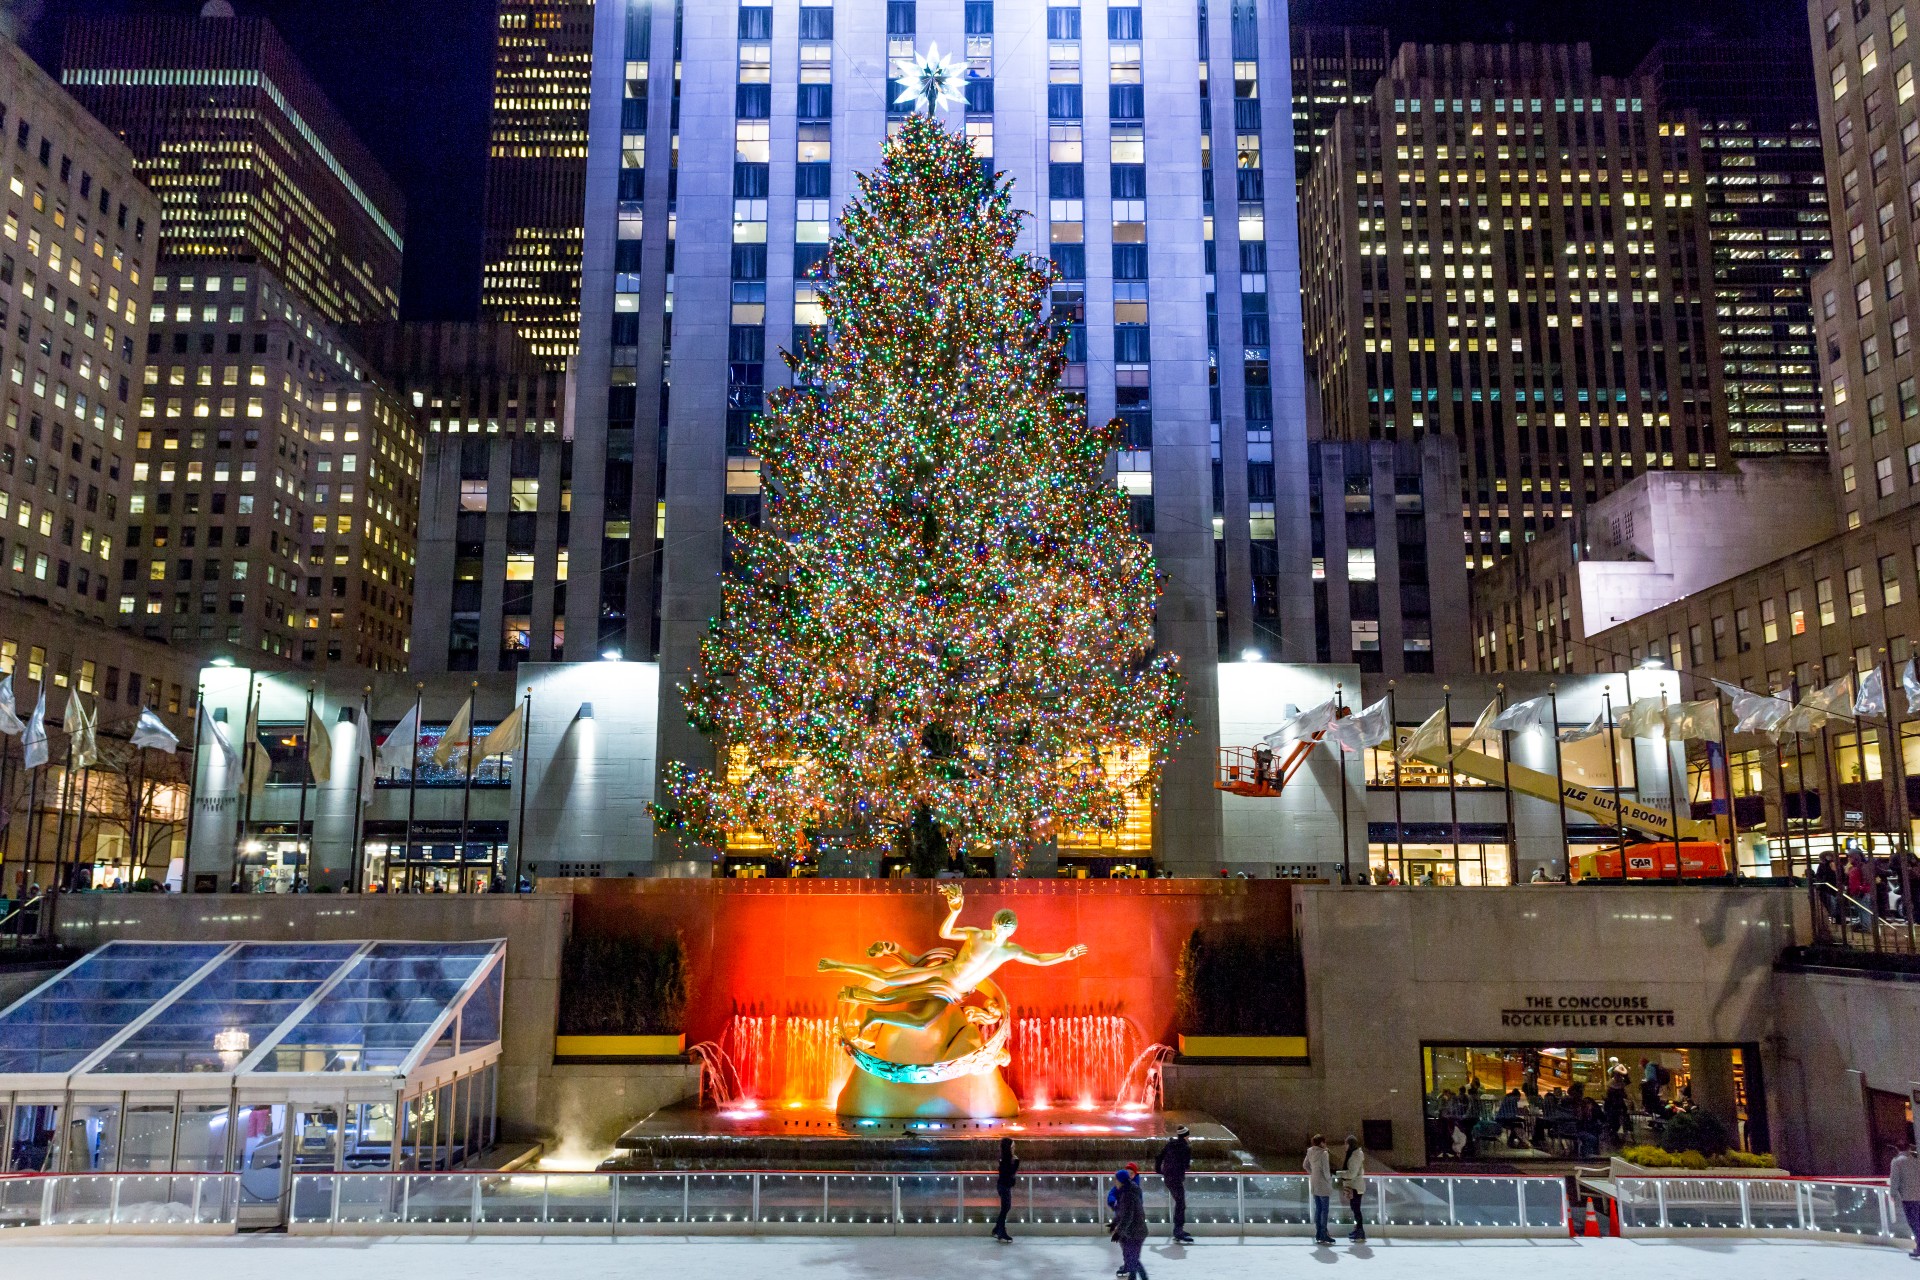 Where to watch the Rockefeller Center Christmas tree lighting